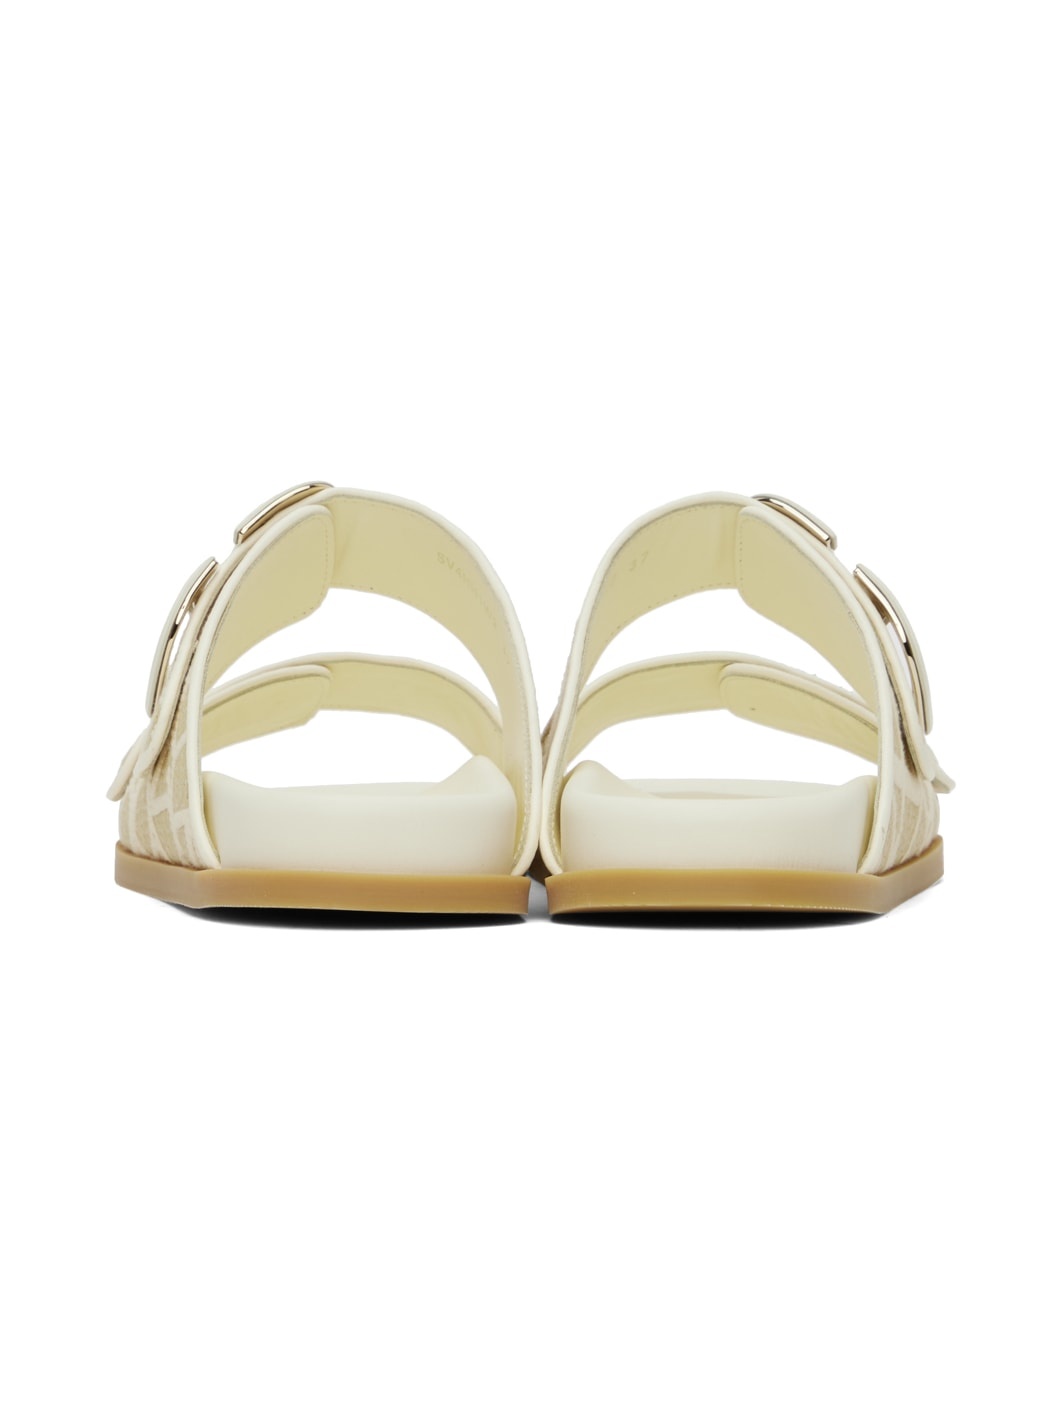 Off-White & Beige VLogo Toile Iconographe Sandals - 2